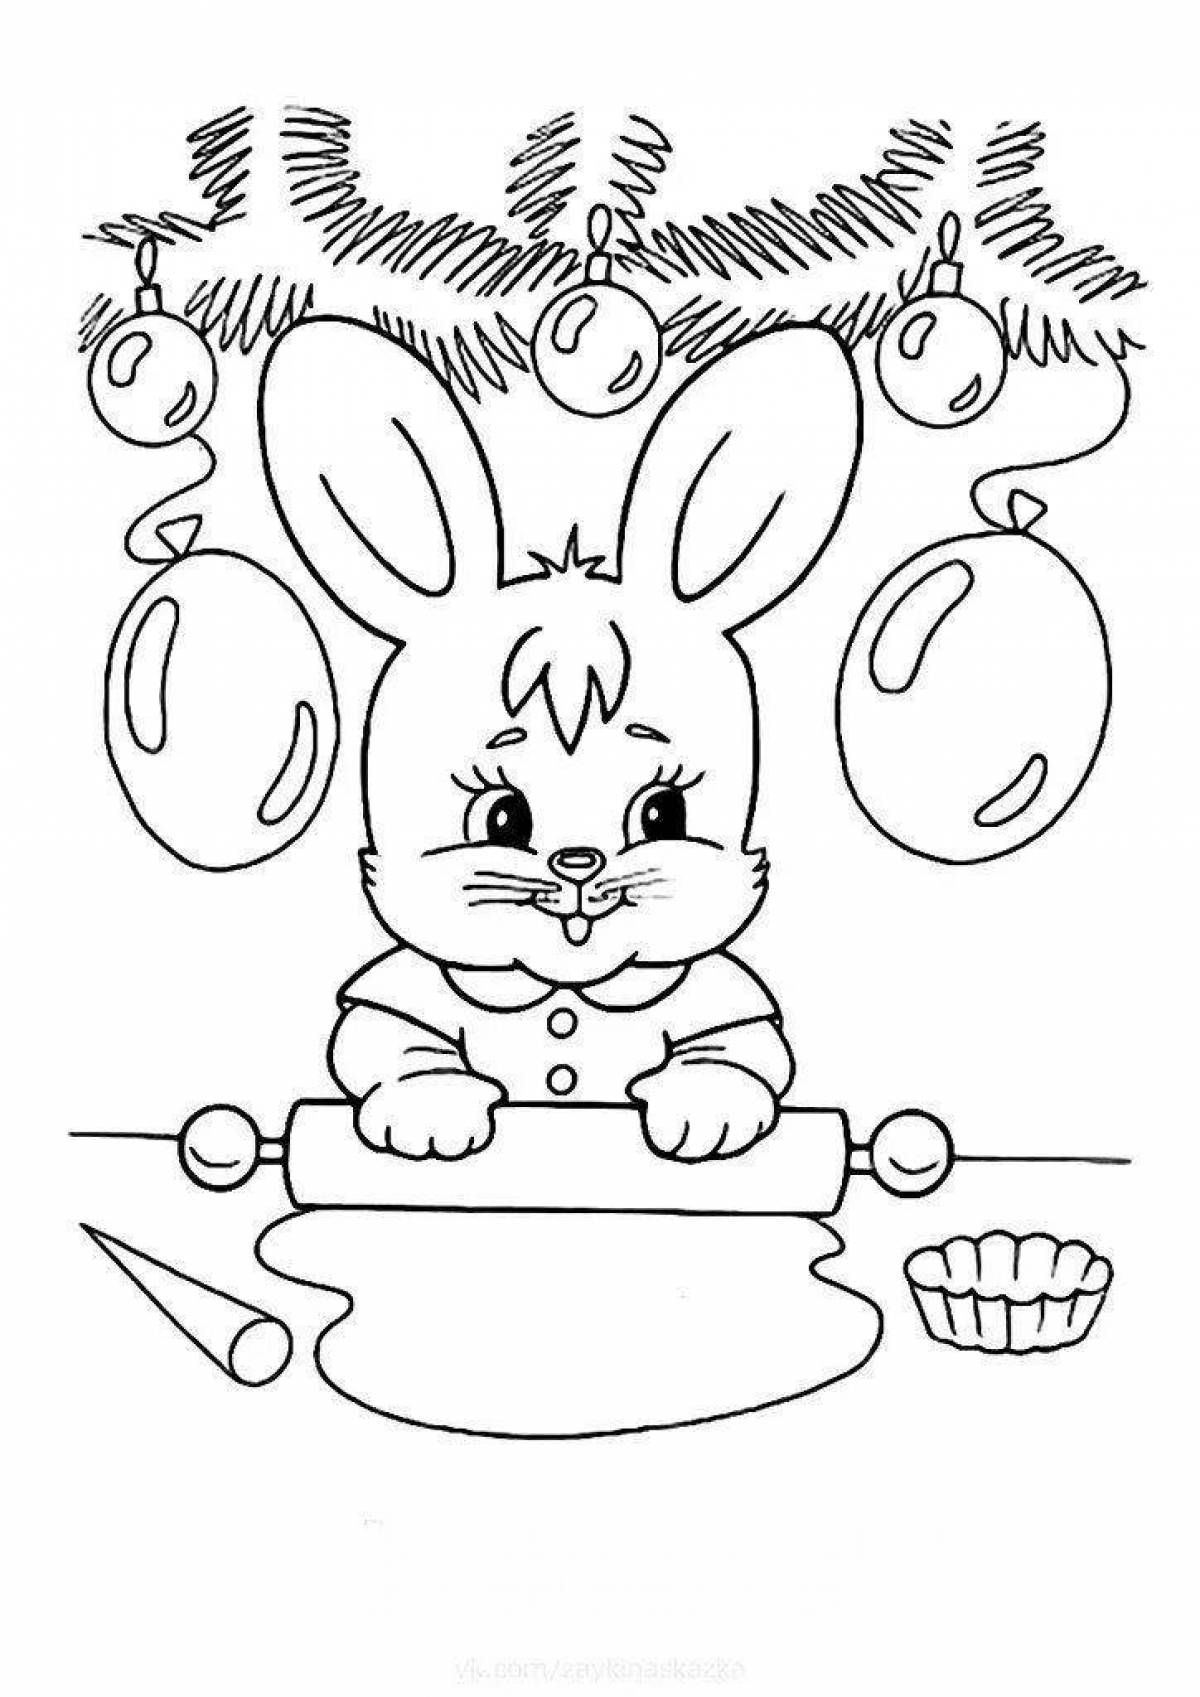 New year bunny #5